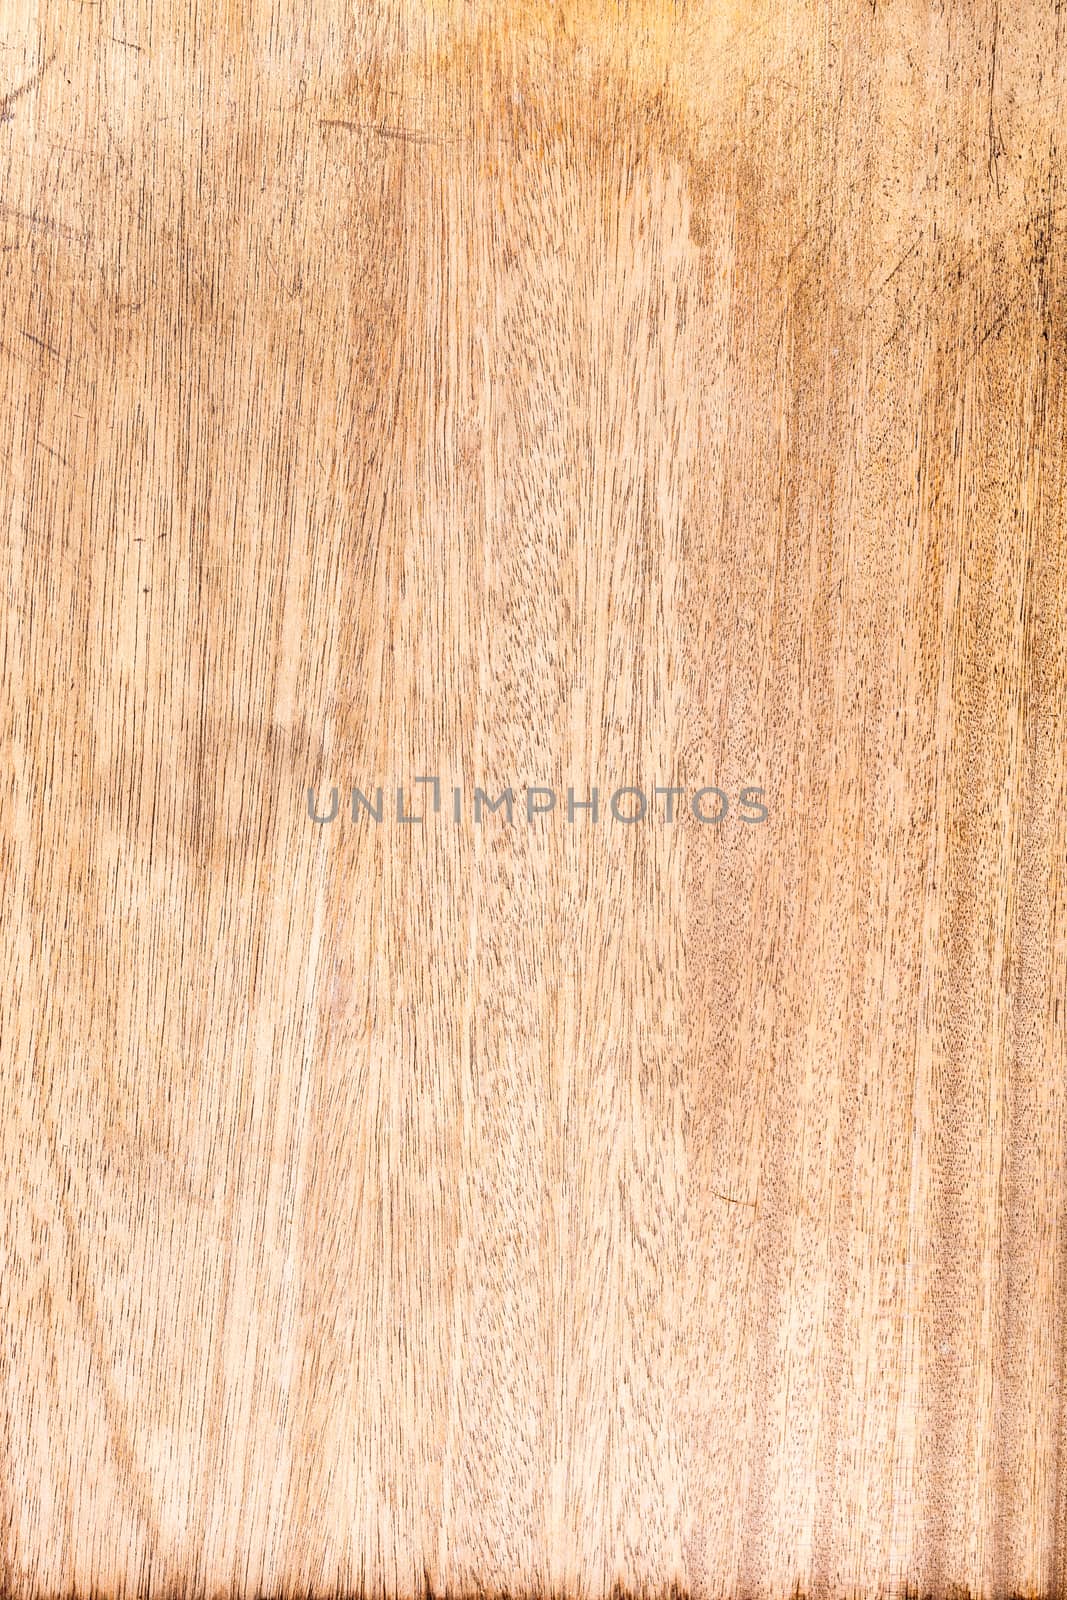 High resolution vintage natural woodgrain texture .